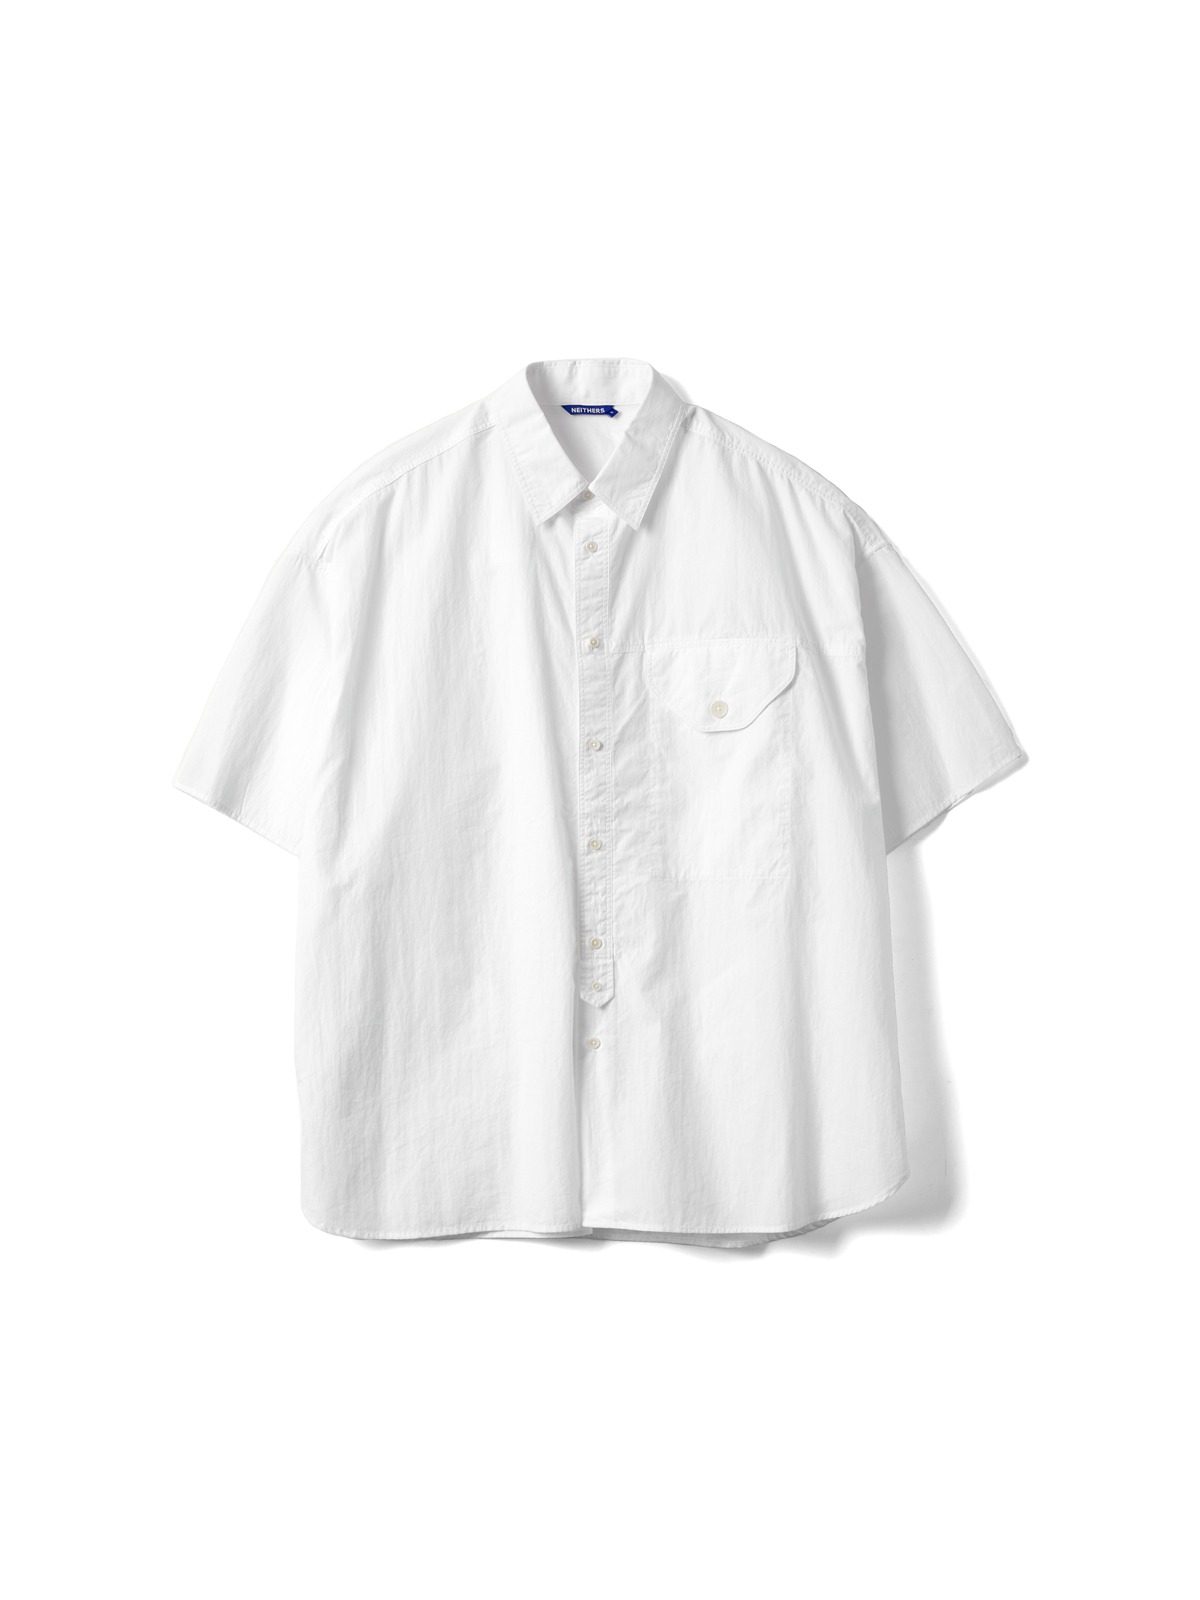 Engineer S/S Shirt (Off White)